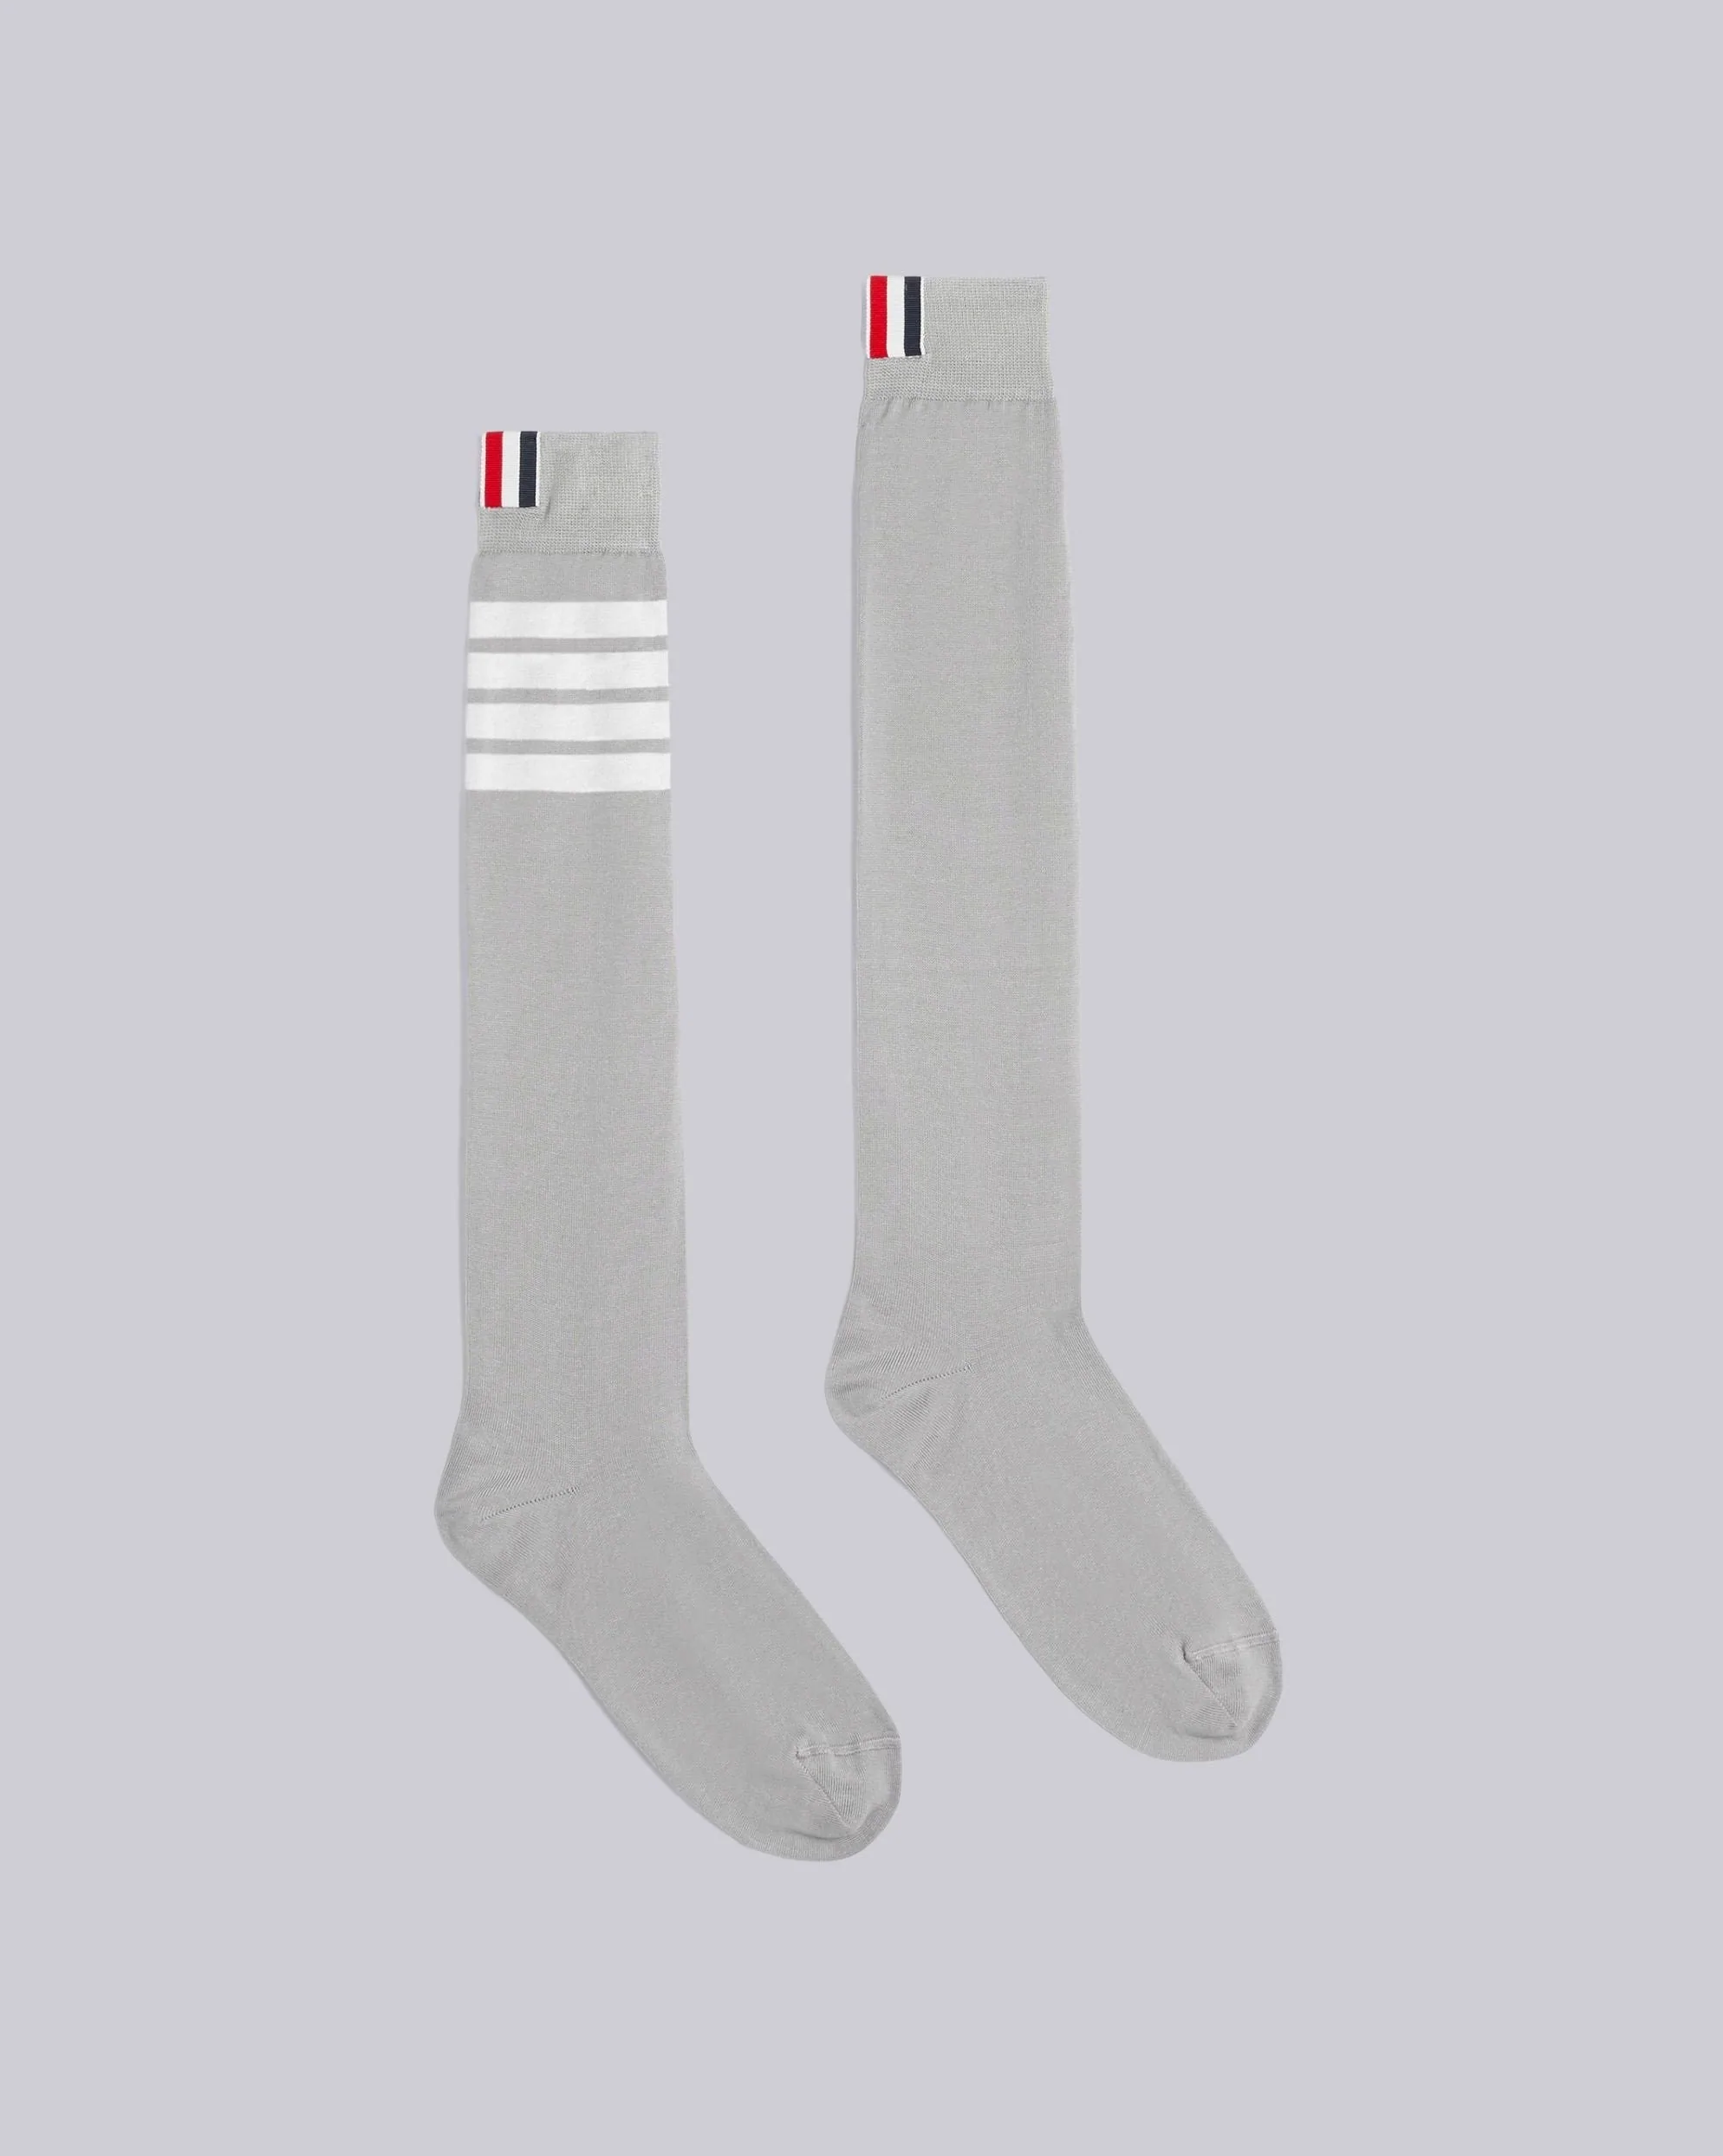 Thom Browne 4-Bar Knee-High Nylon Blend Grey Sock